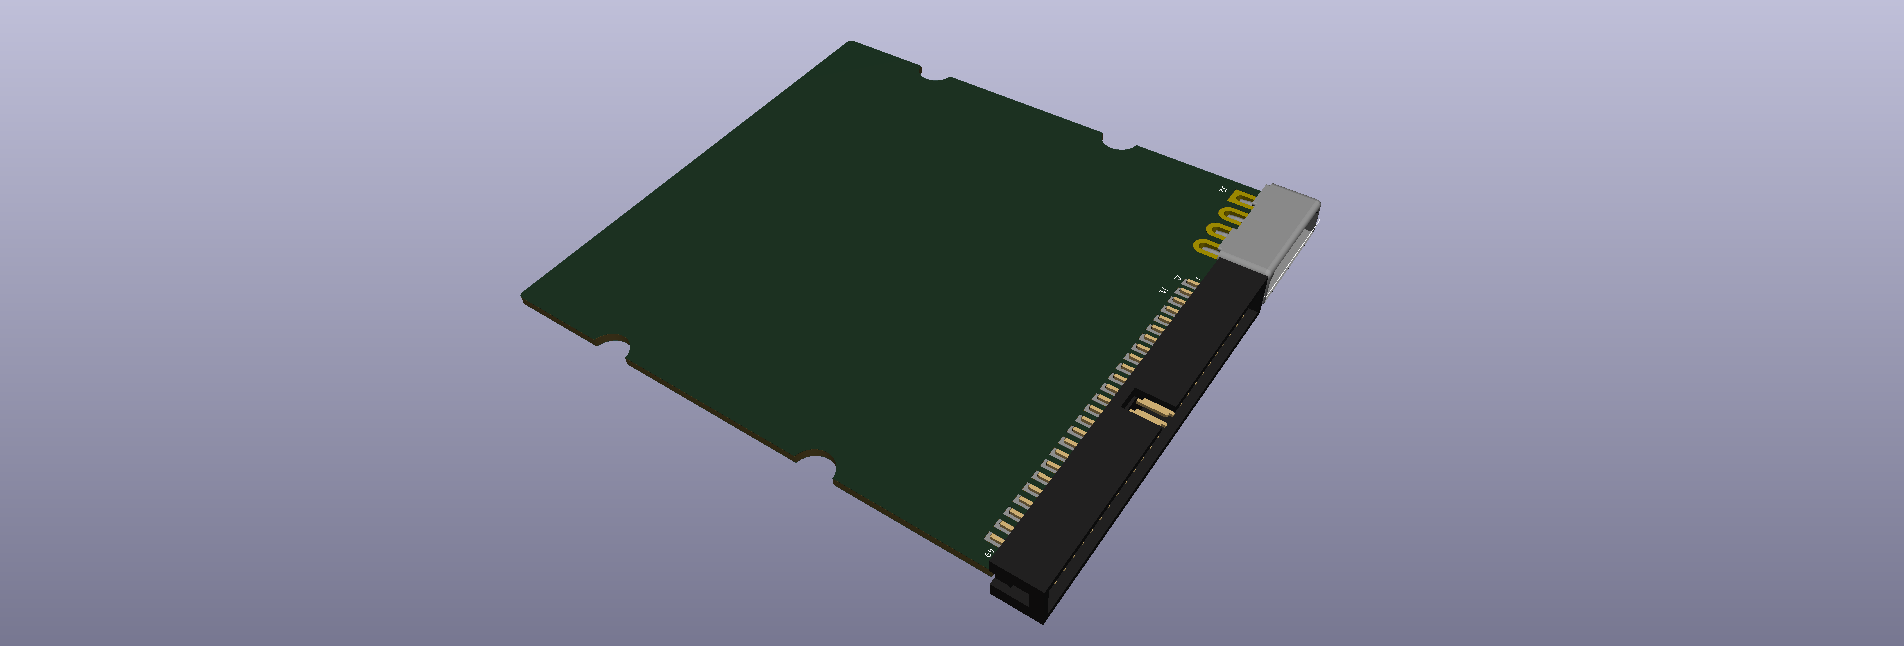 3.5 Hard Drive 50-pin SCSI ED 100 v1.0